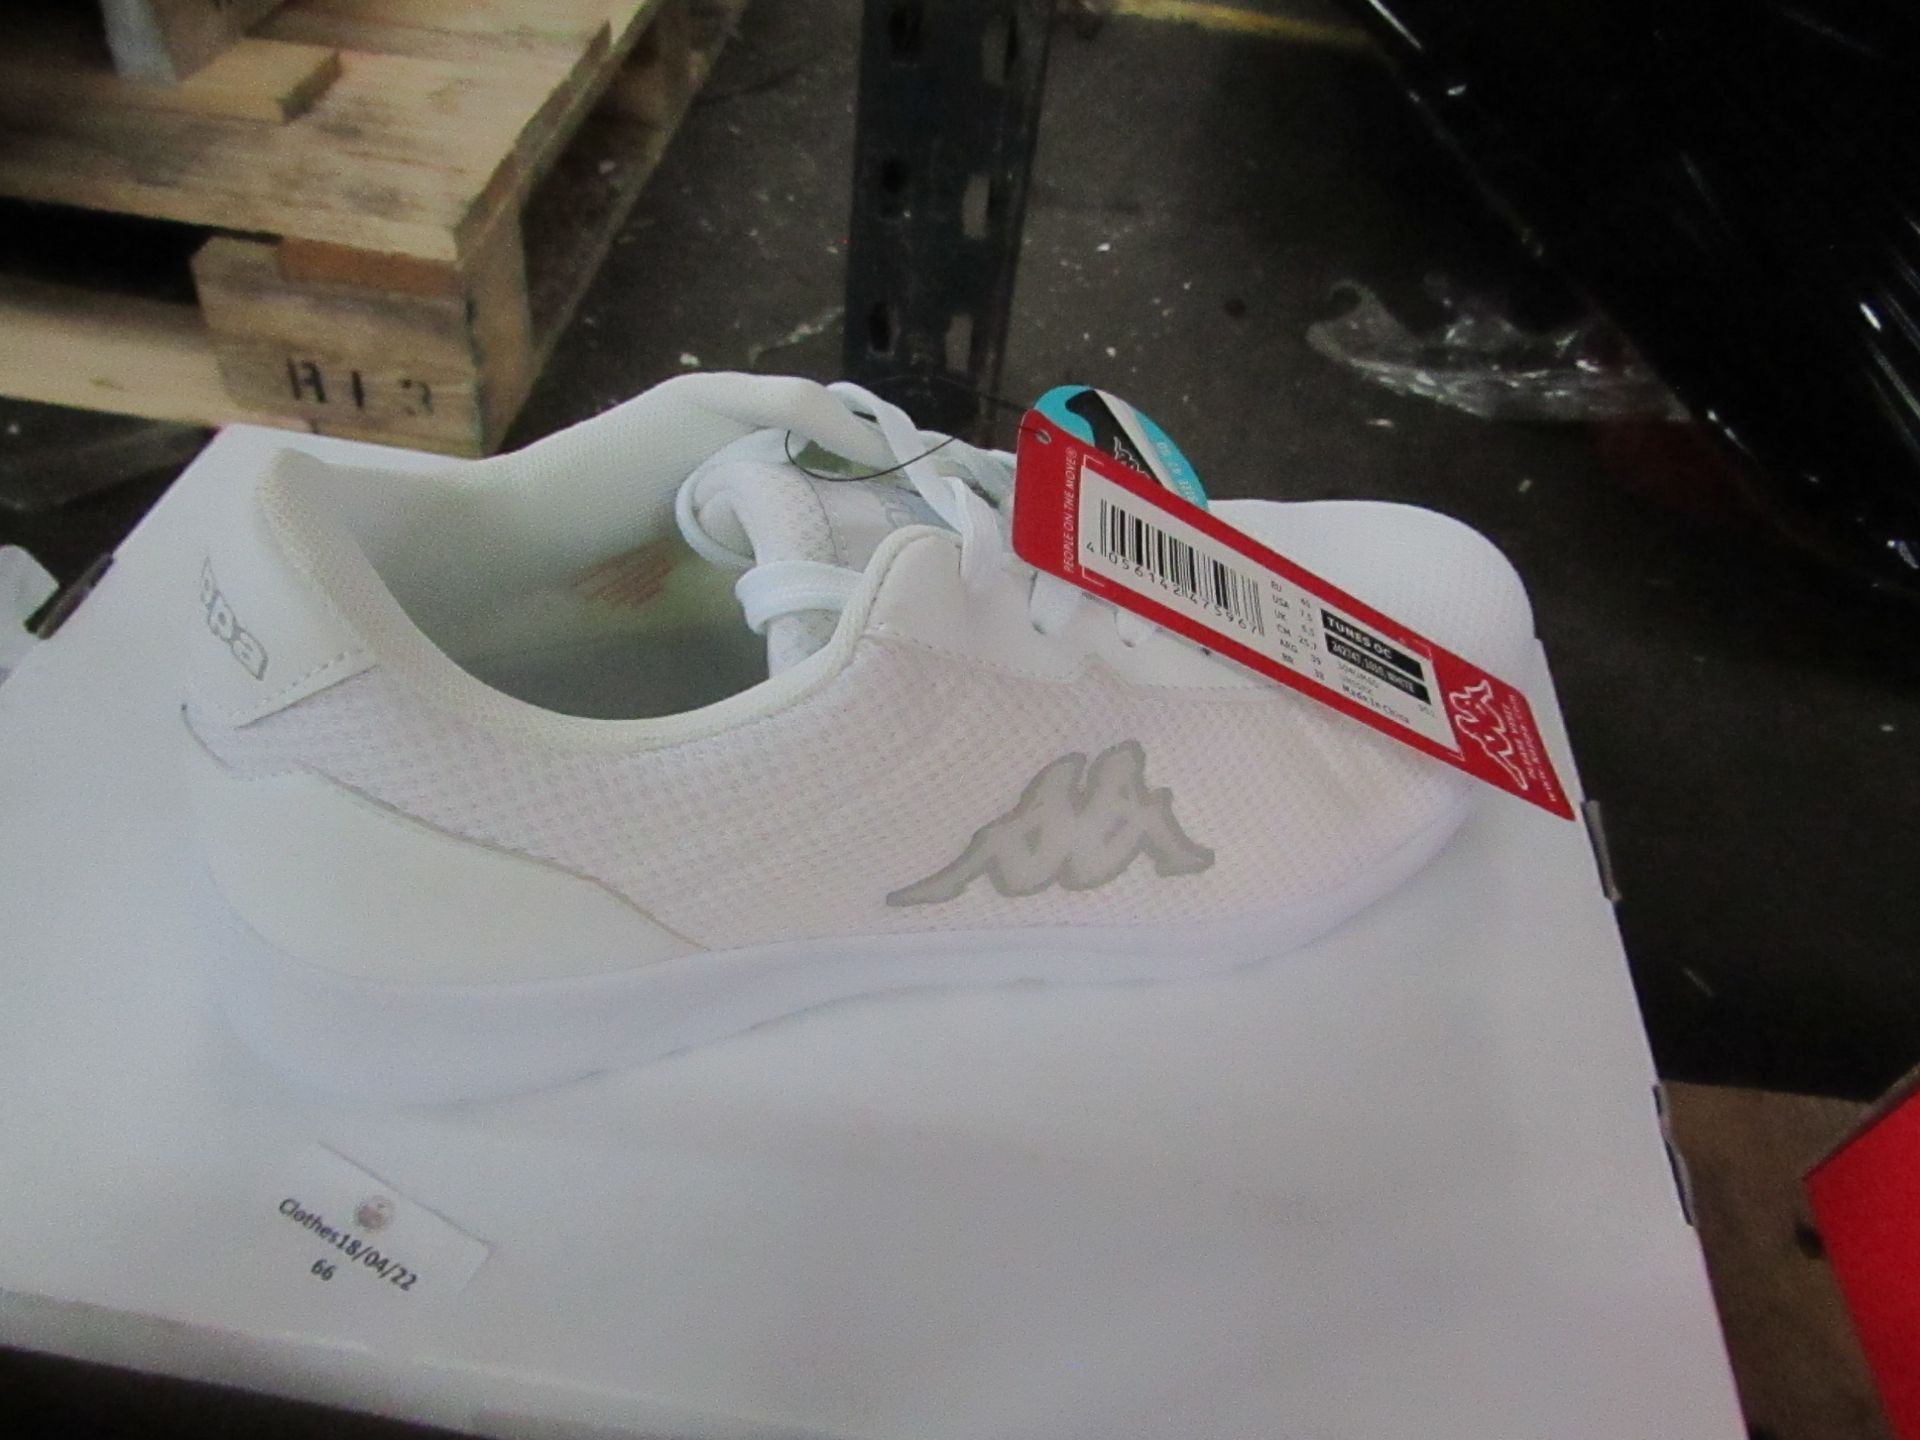 Kappa White trainers, new size 6.5